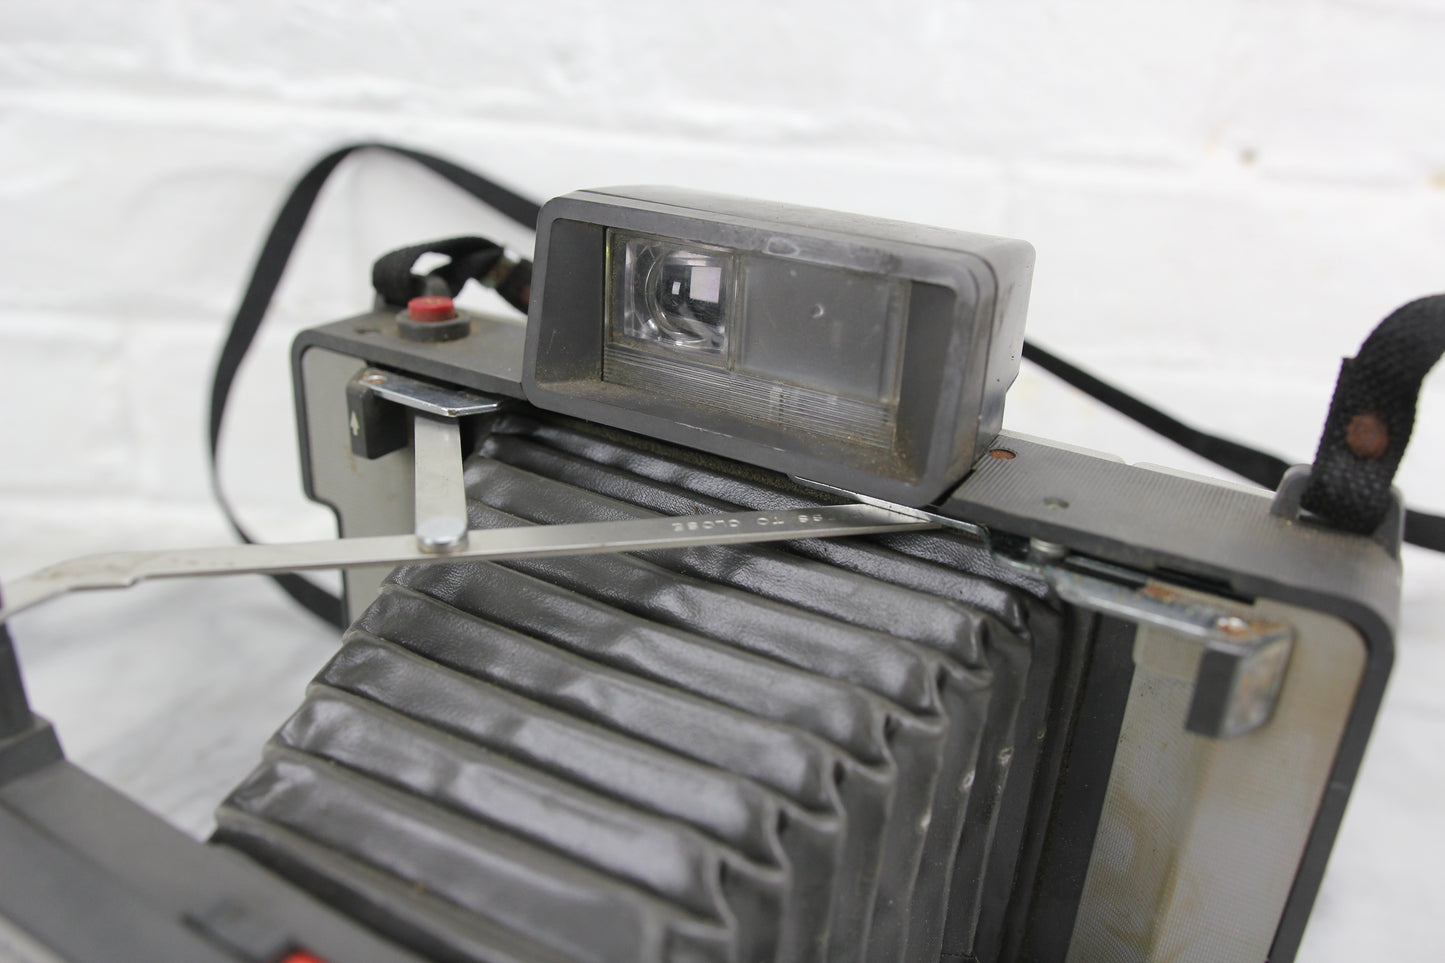 Polaroid Land Camera Automatic 104 Folding Instant Camera